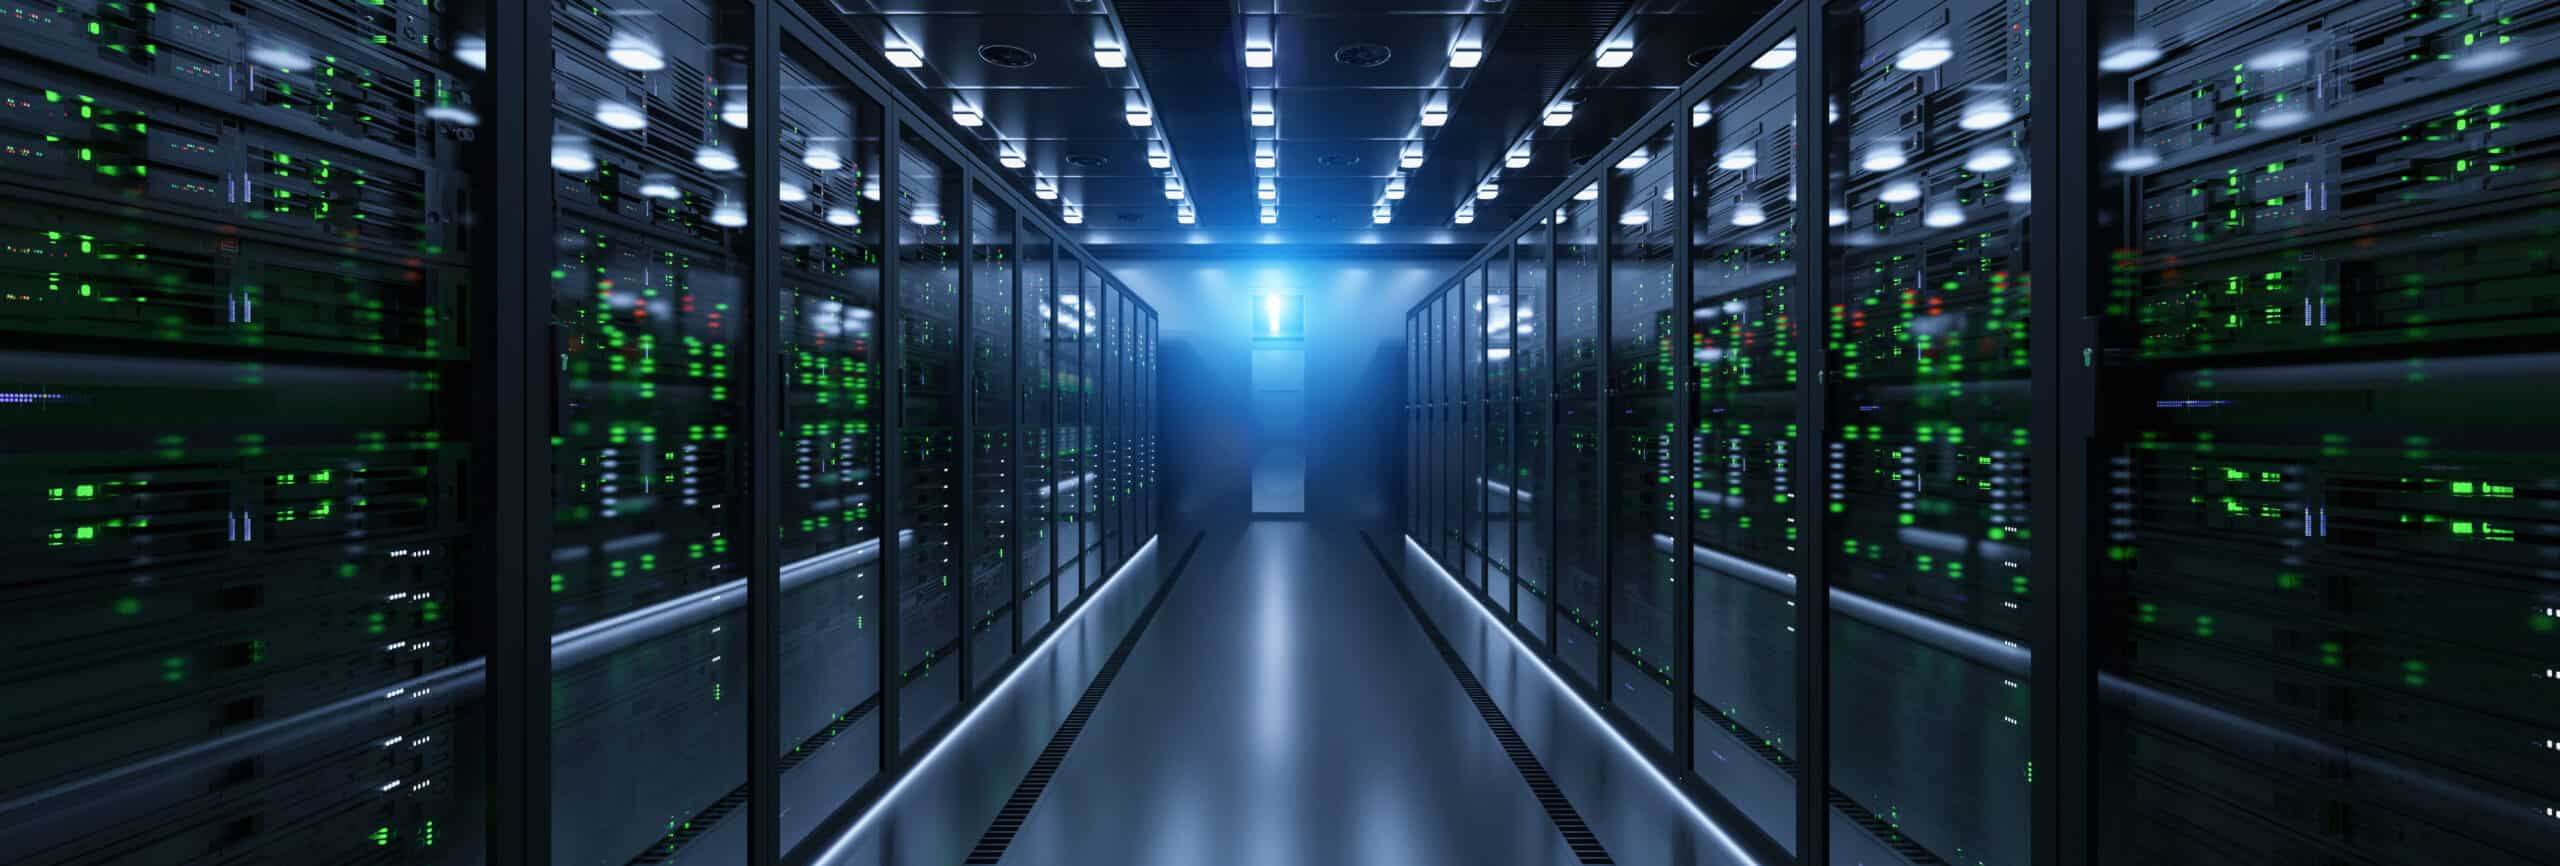 A long hallway of servers at a cloud service data center.